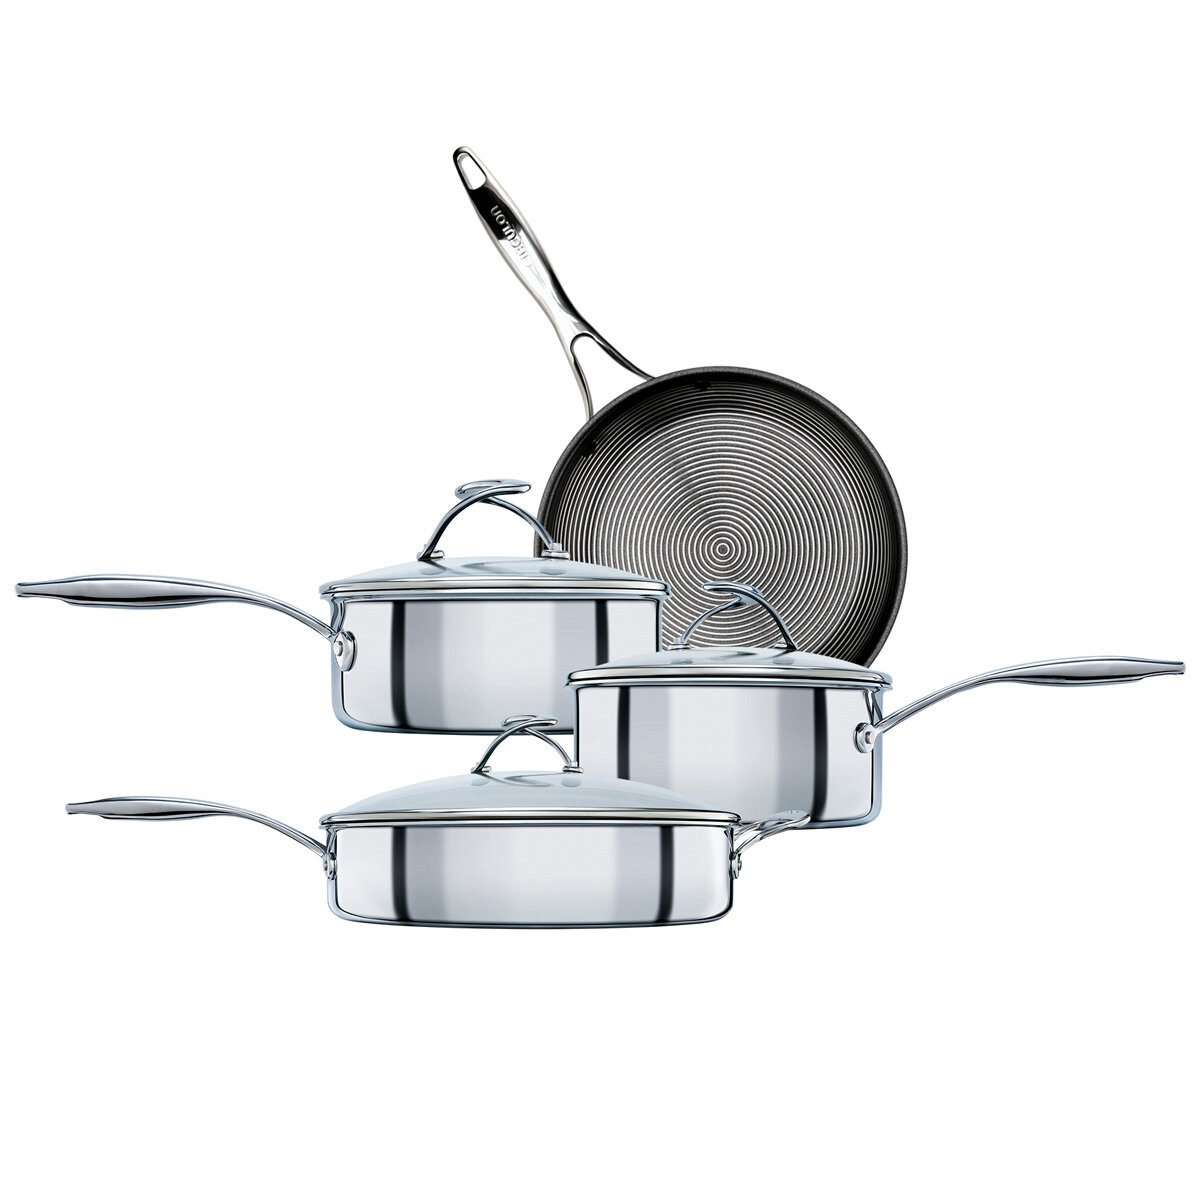 Circulon C-Series Tri-Ply Cookware Set, 4 Piece